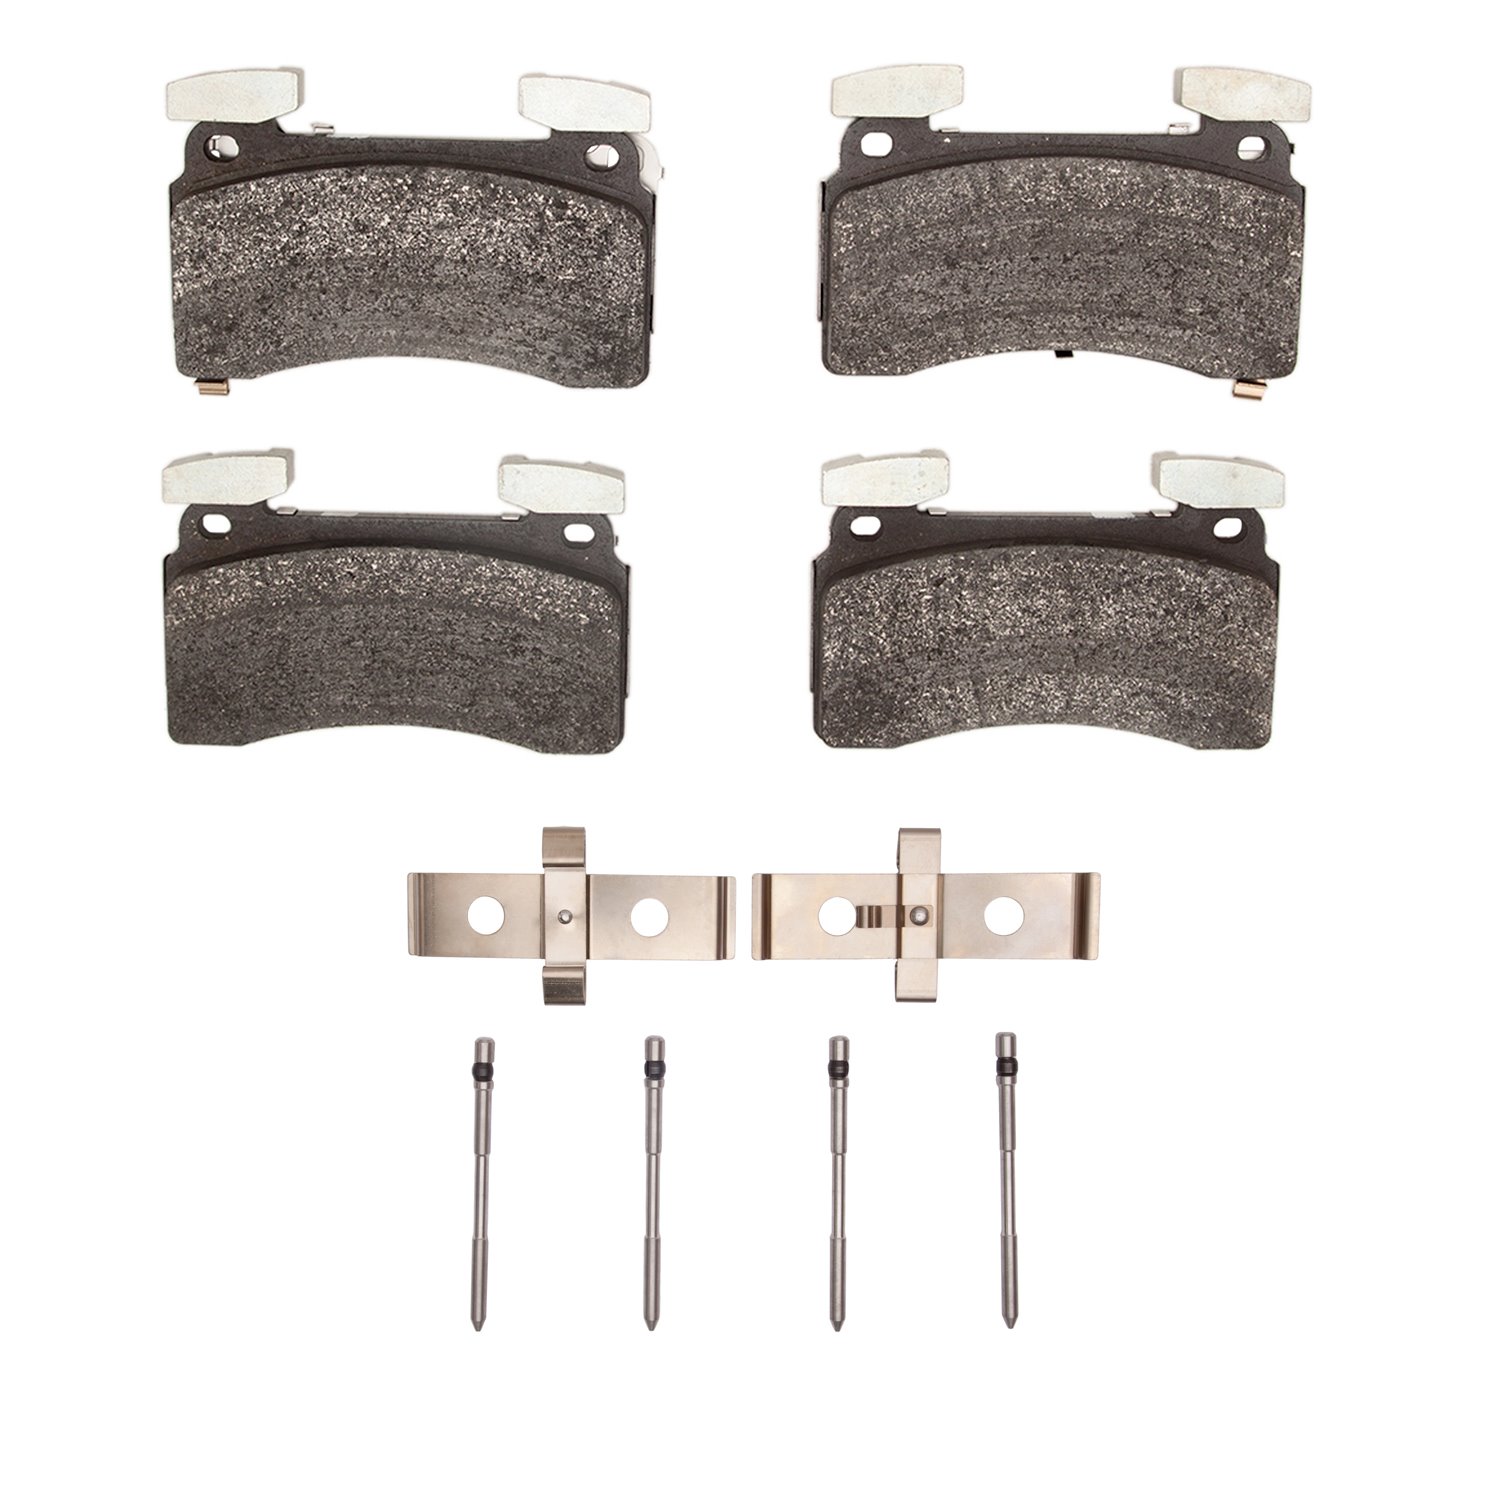 1551-2254-01 5000 Advanced Low-Metallic Brake Pads & Hardware Kit, Fits Select Acura/Honda, Position: Rear